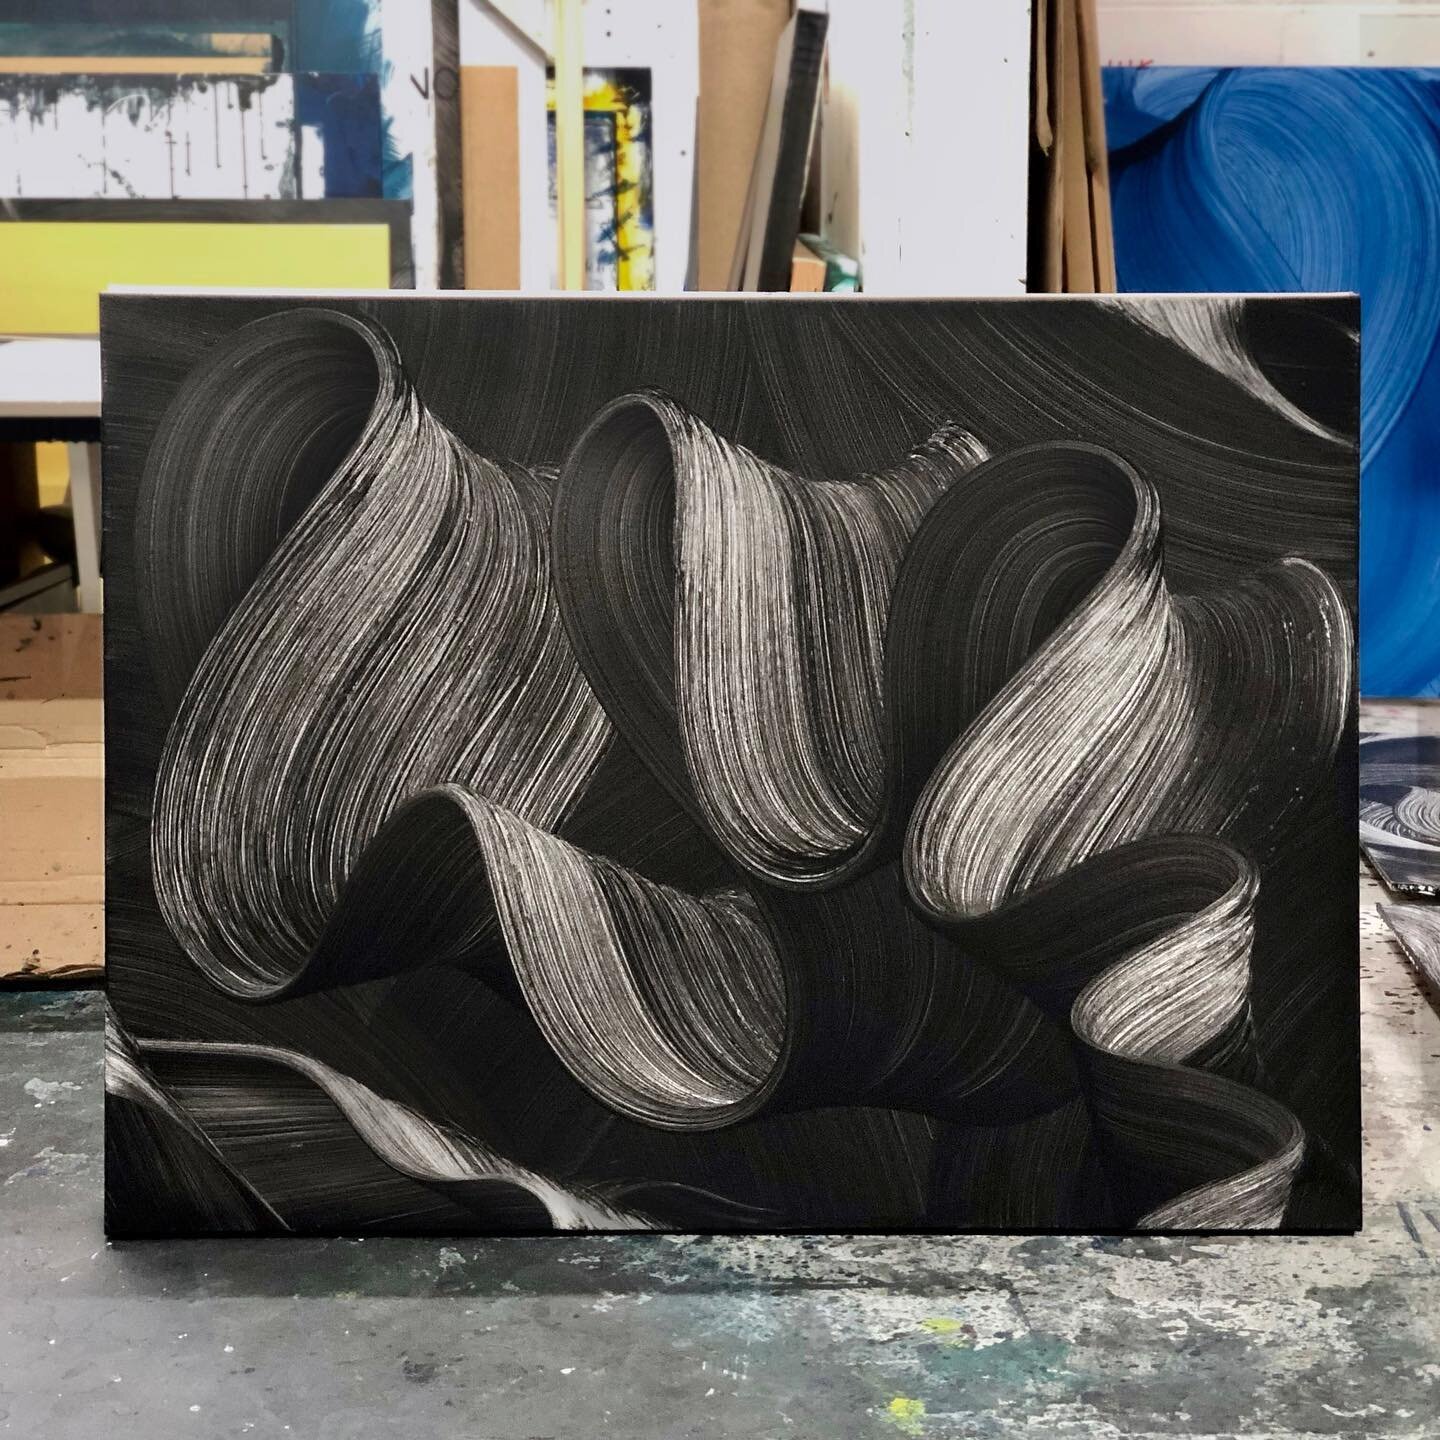 Findings from last year&rsquo;s whispers.
91x121cm
Acrylic of canvas
.
.
.
.
.
.
.
.
.
.

#atelierdartiste #blackandwhitepainting #peintureabstraite #abstractminimalism #abstraction #minimalabstractart #peinturecomtemporaine #artistatwork #artiststud